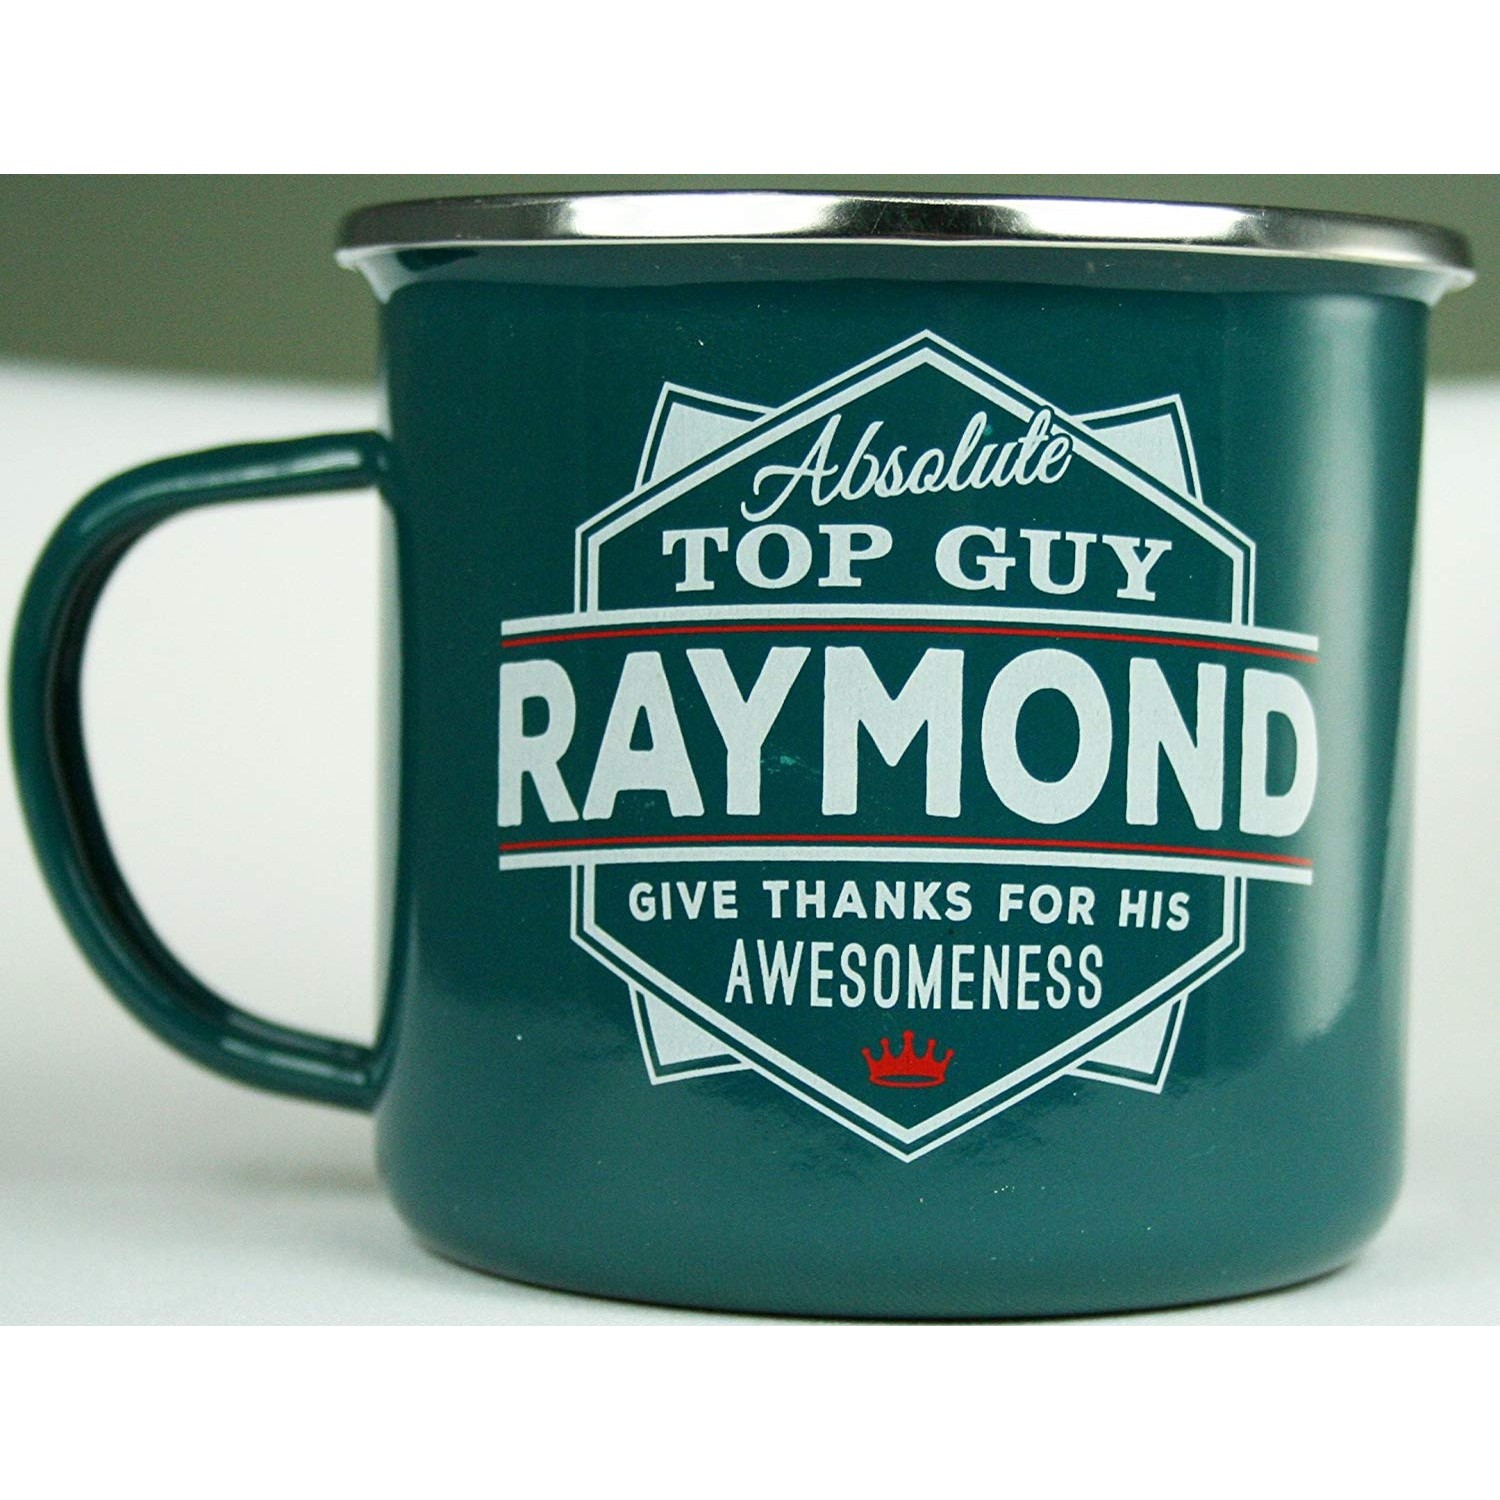 Top Guy Enamel Mugs (Raymond)